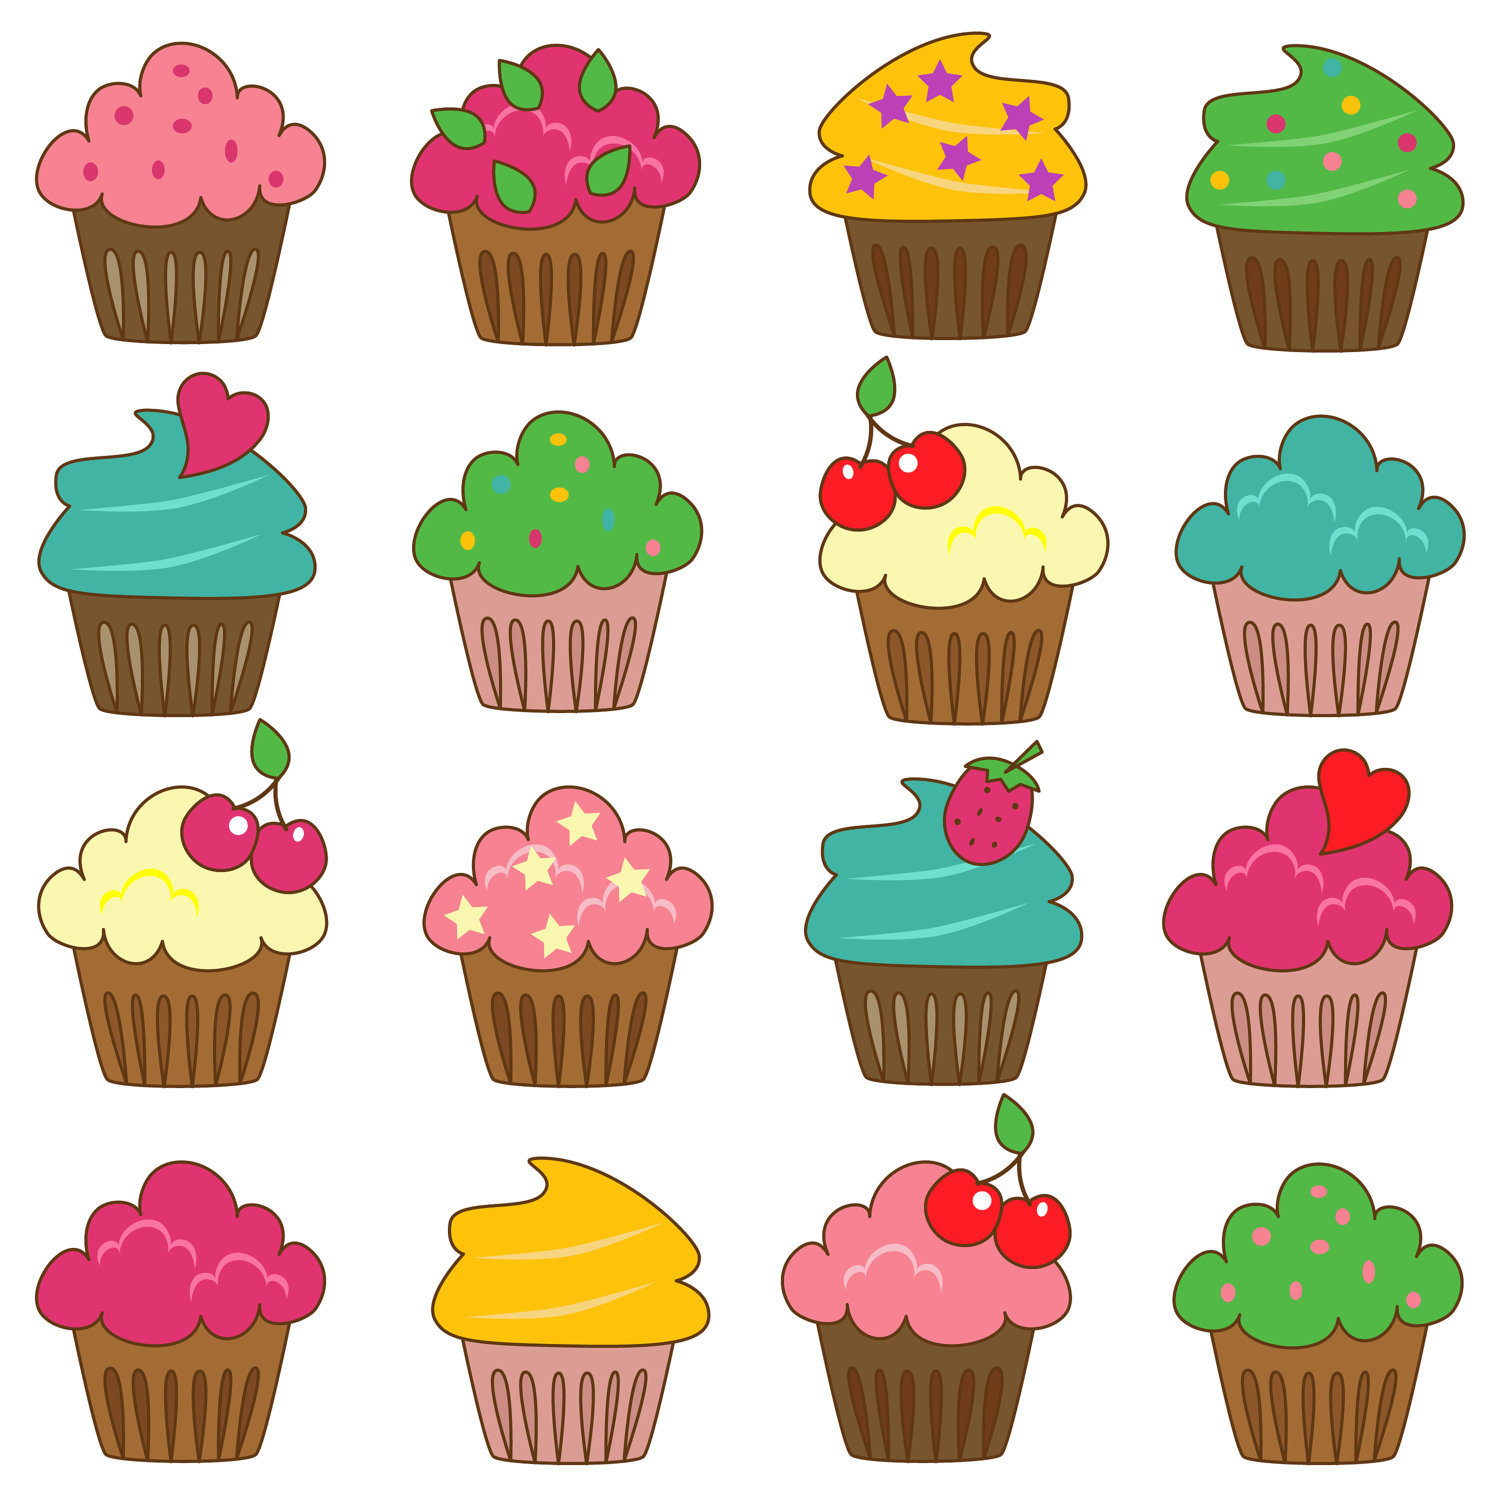 Free Cupcake Cliparts Download Free Cupcake Cliparts Png Images Free Cliparts On Clipart Library